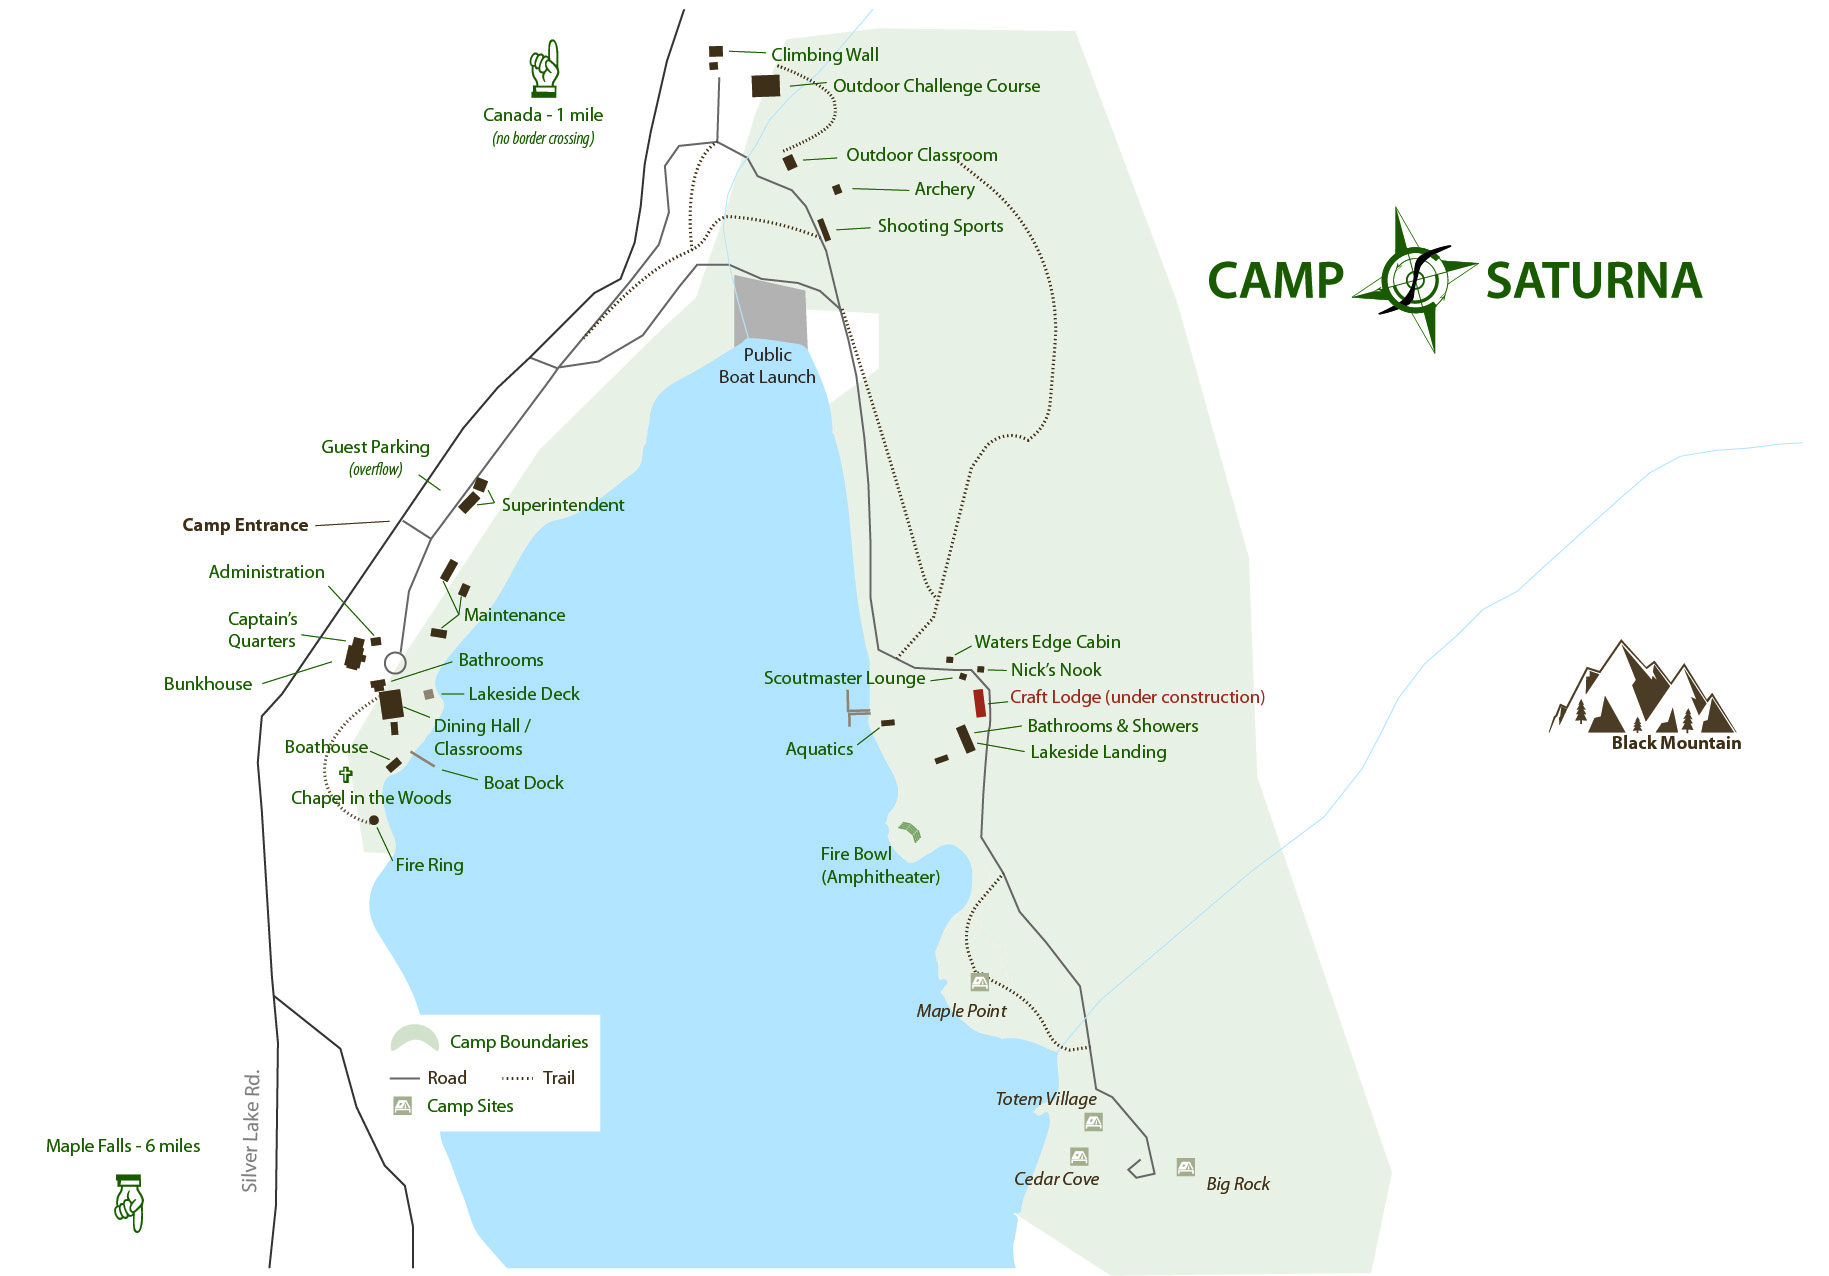 A map of Camp Saturna